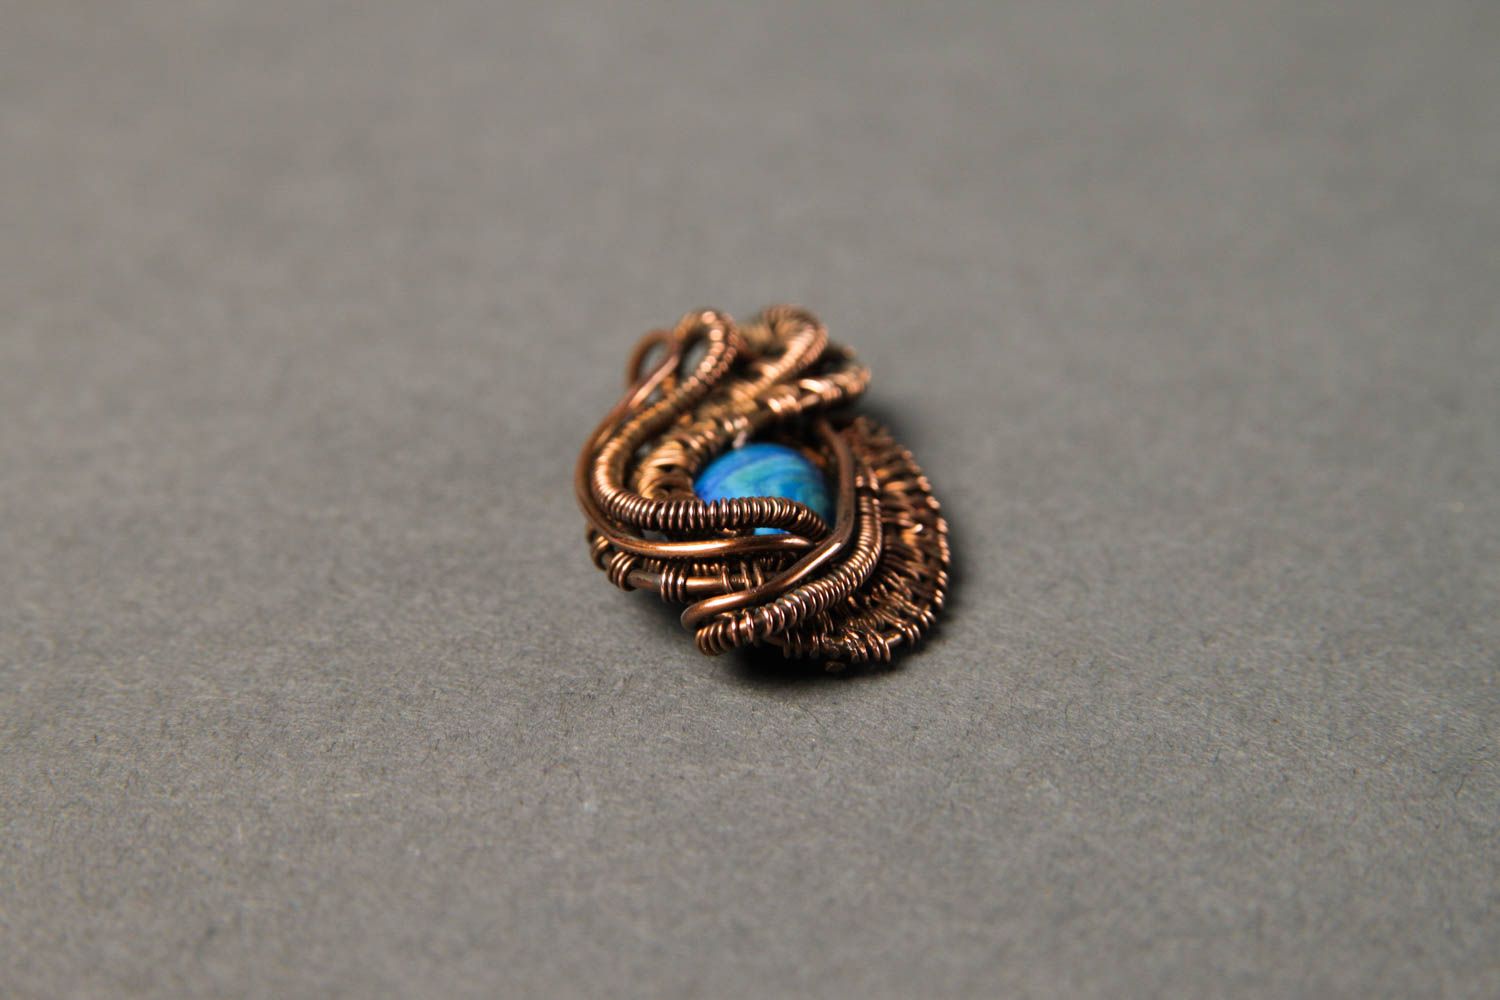 Unusual handmade metal pendant wire wrap ideas artisan jewelry designs photo 5